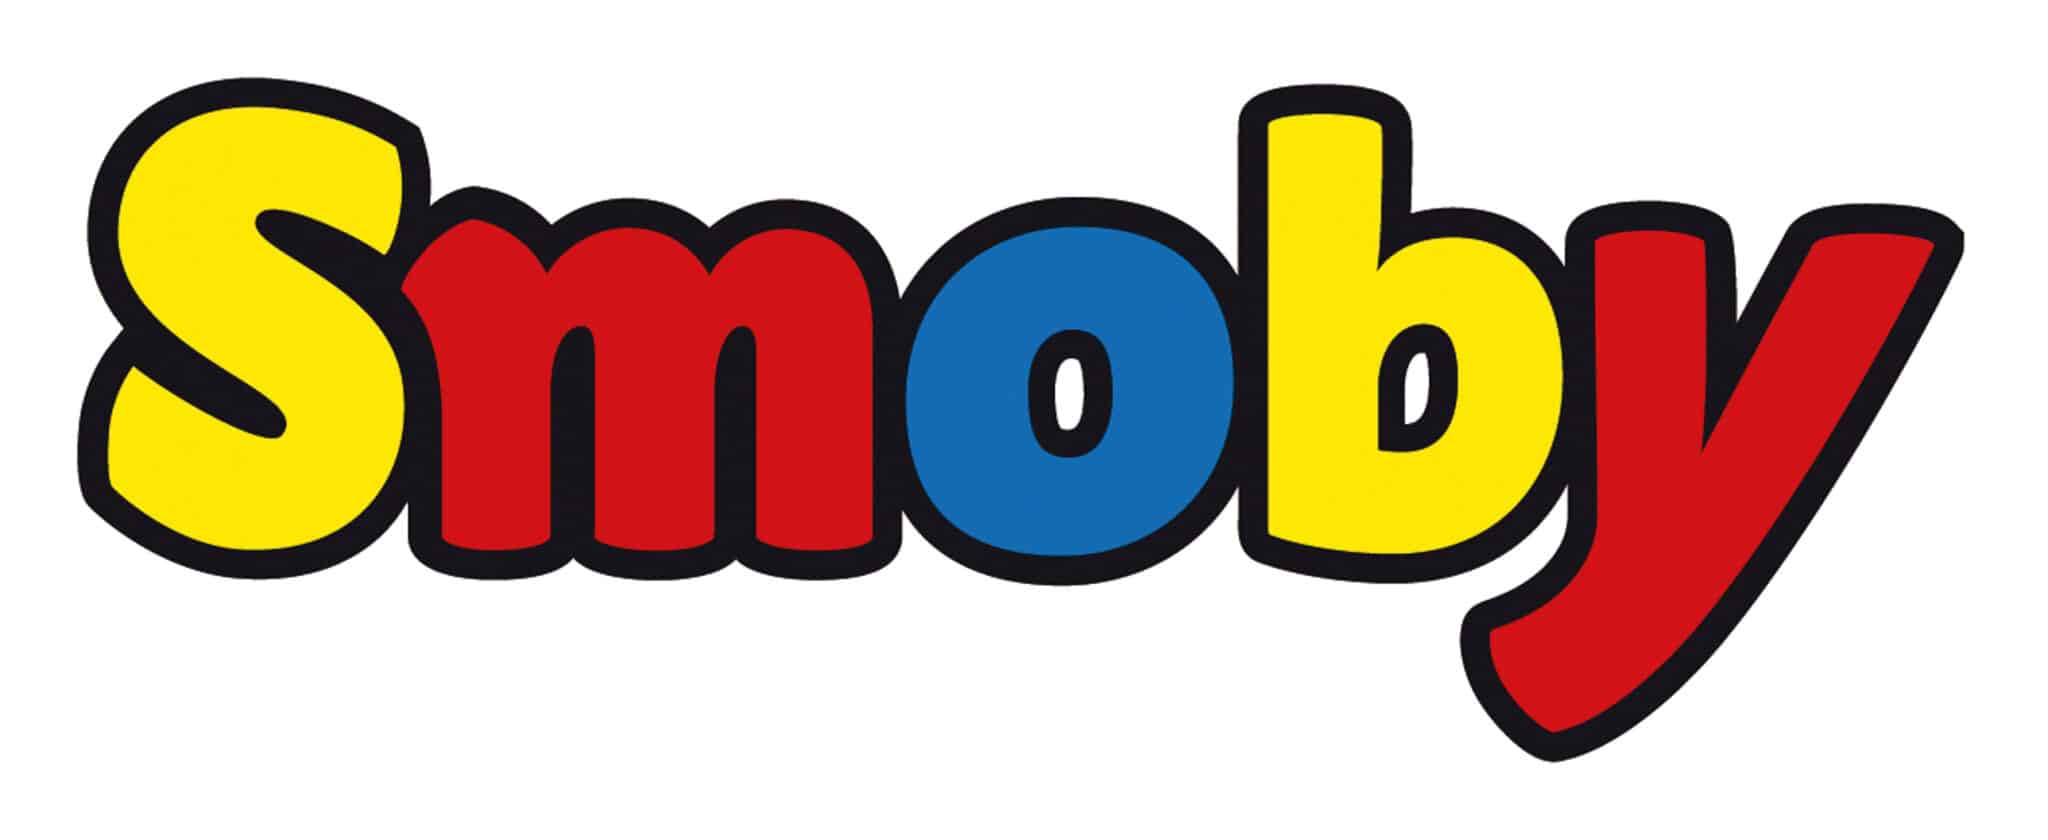 Logo_Smoby